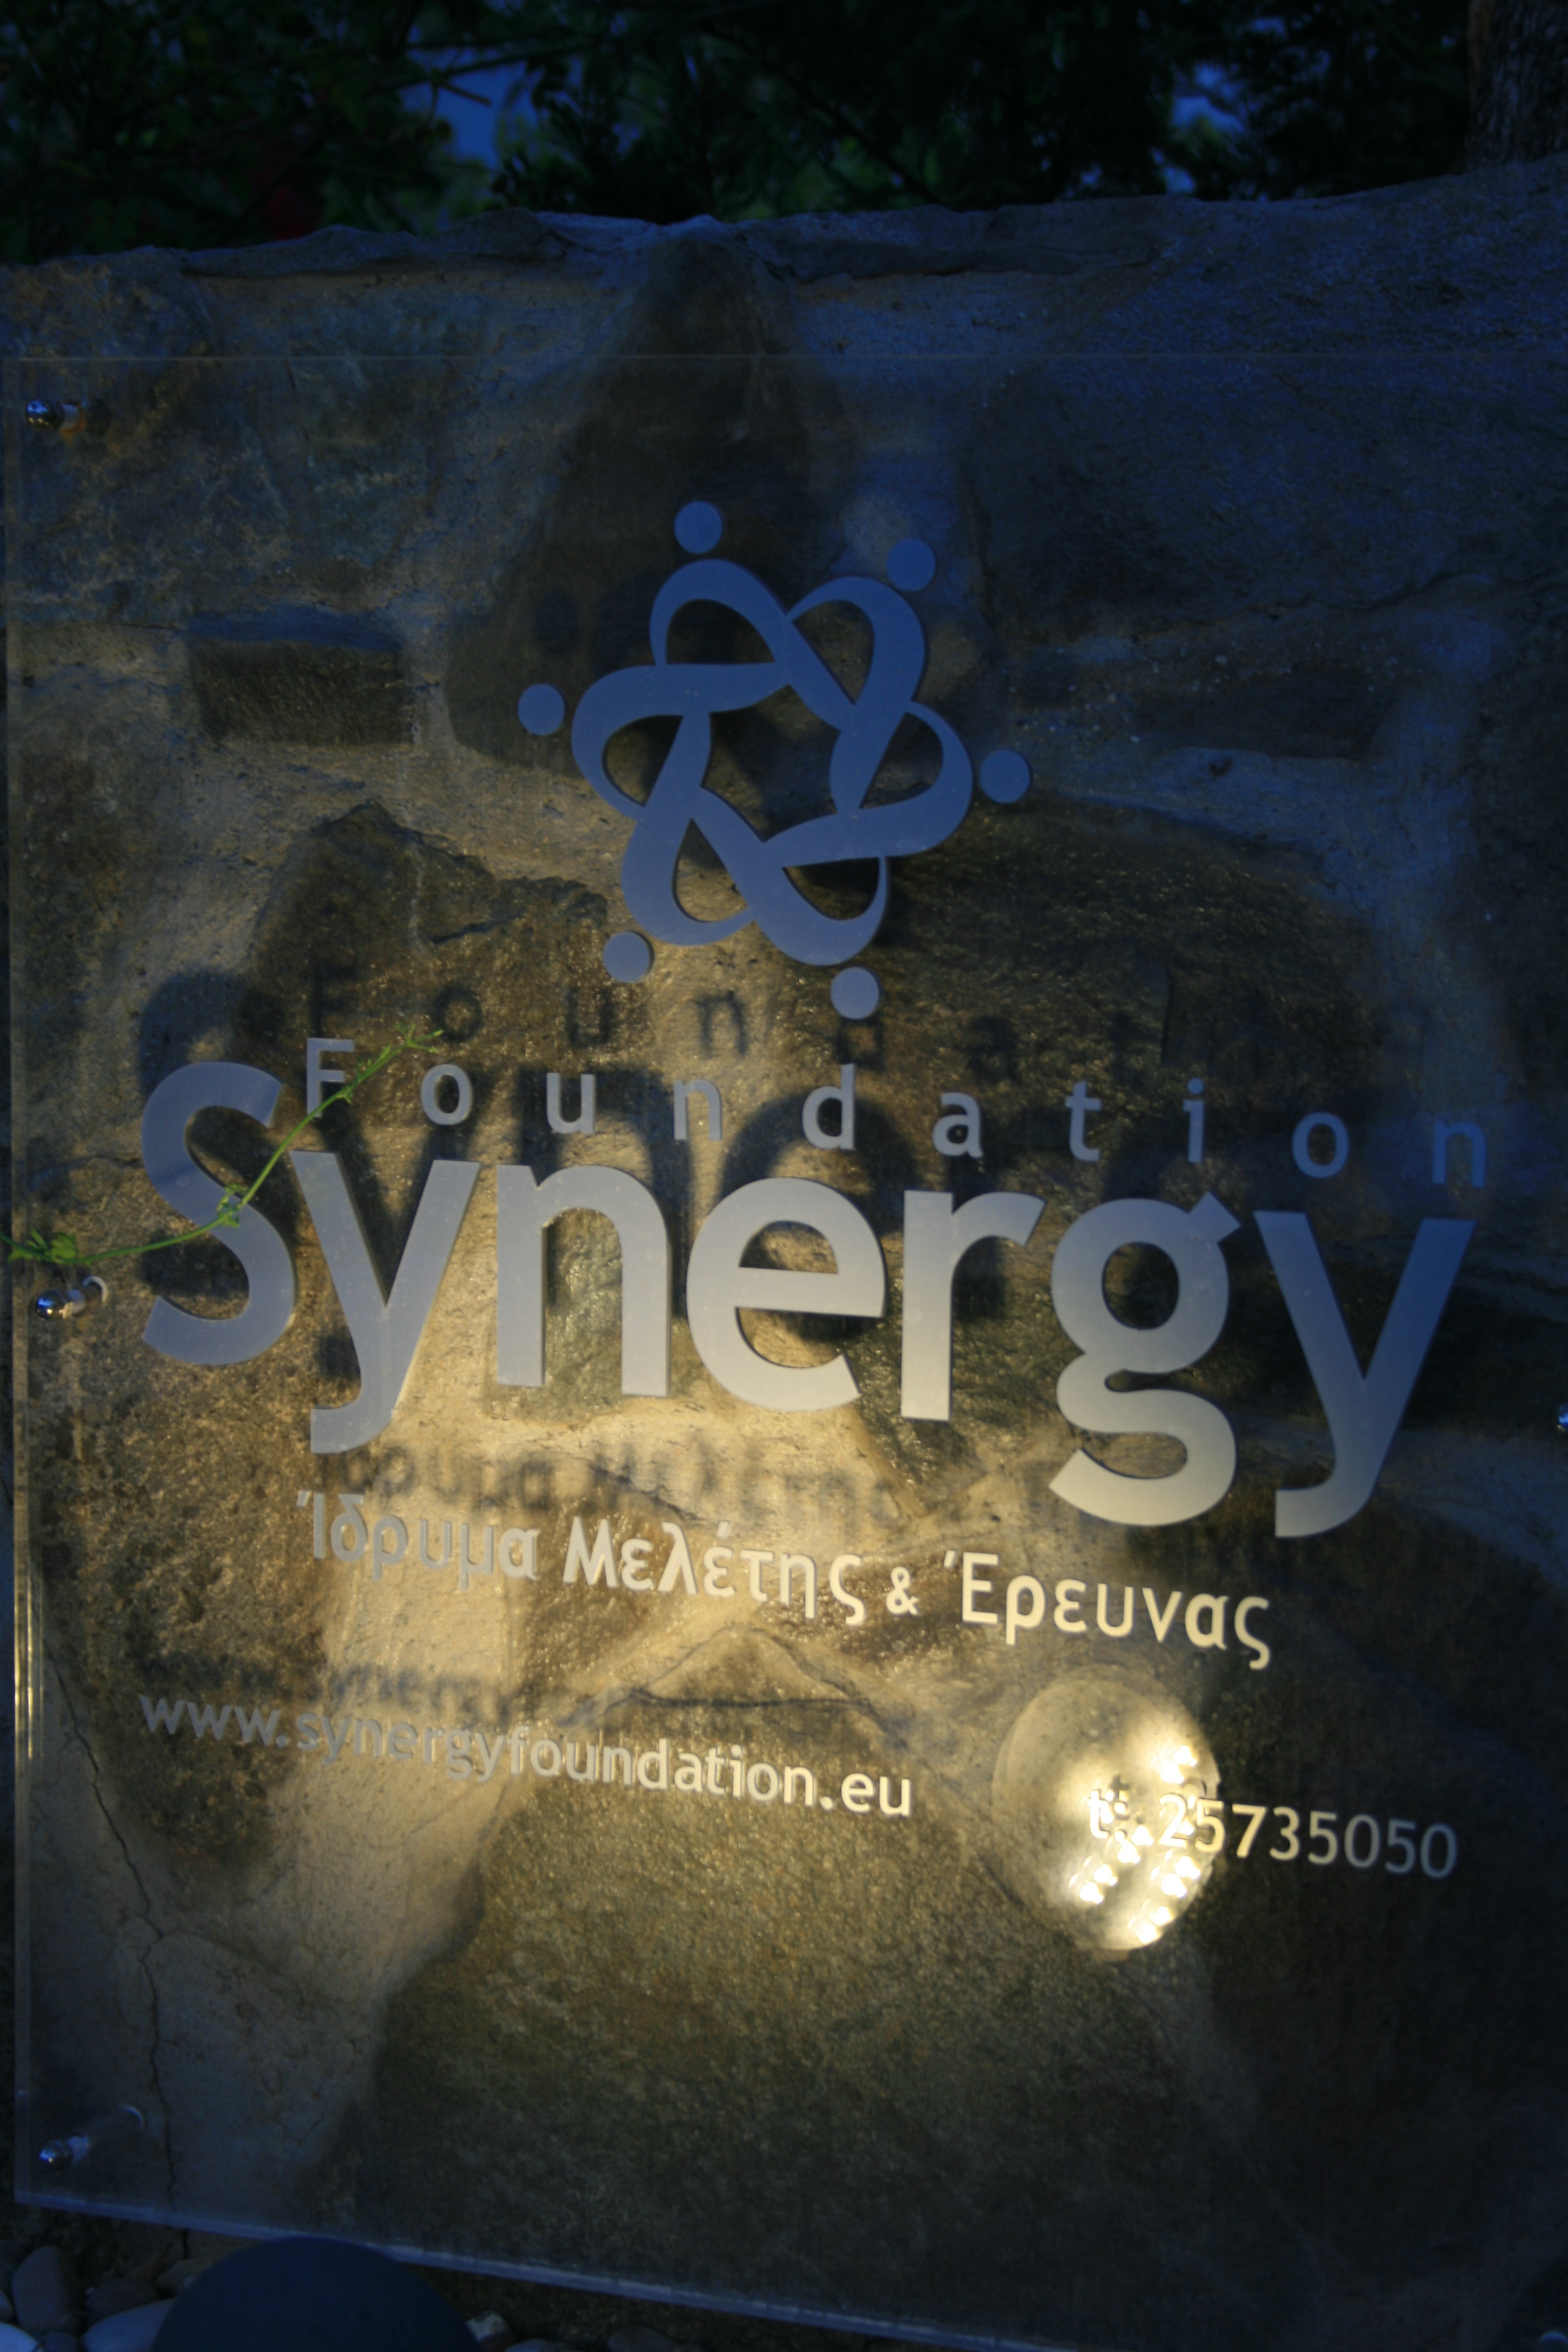 Synergy Foundation